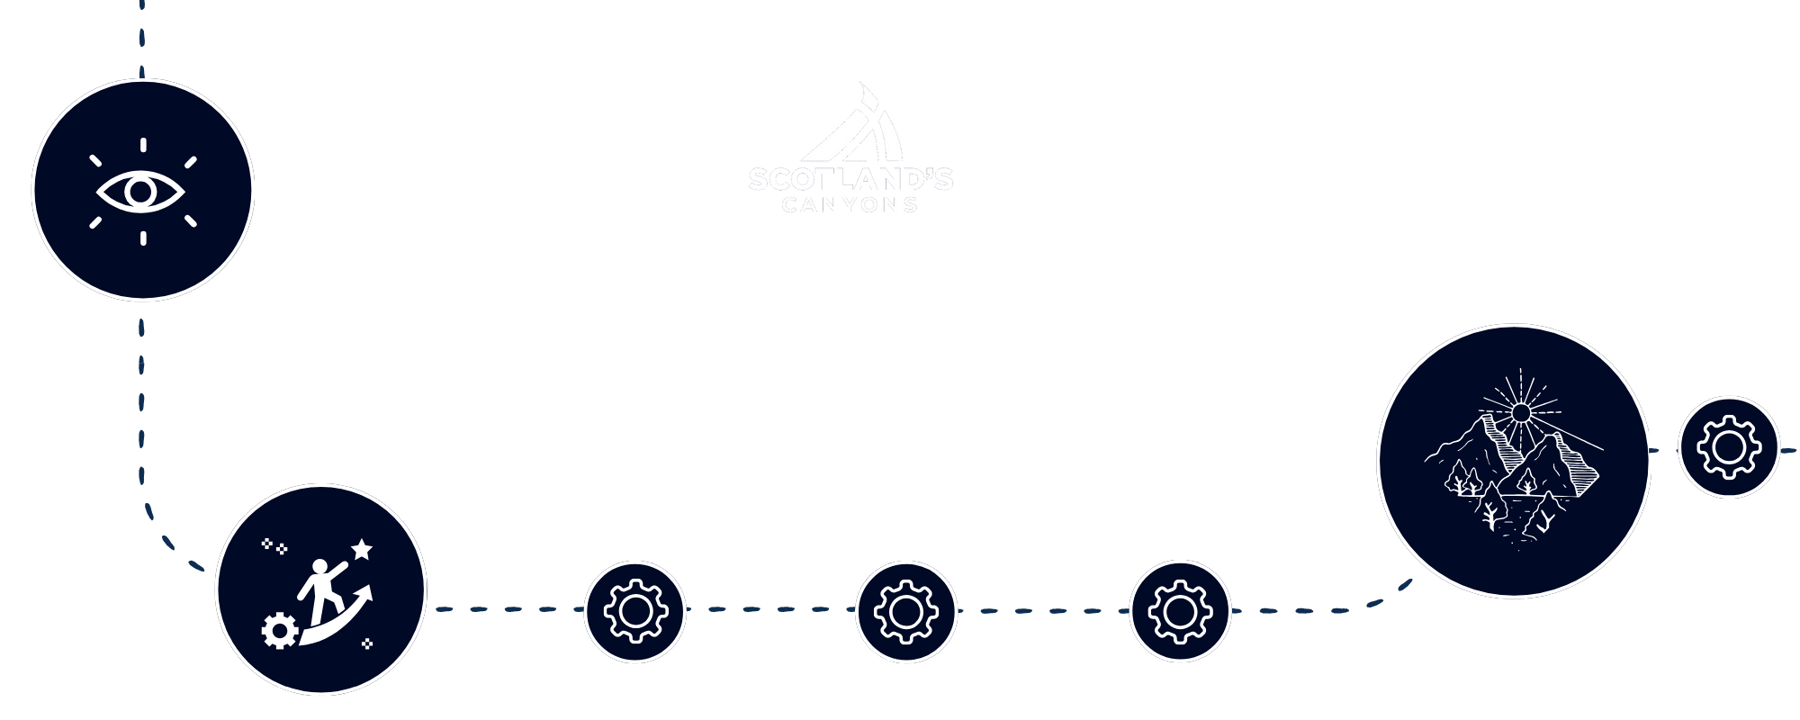 The Adventure Pathway Info Graphic